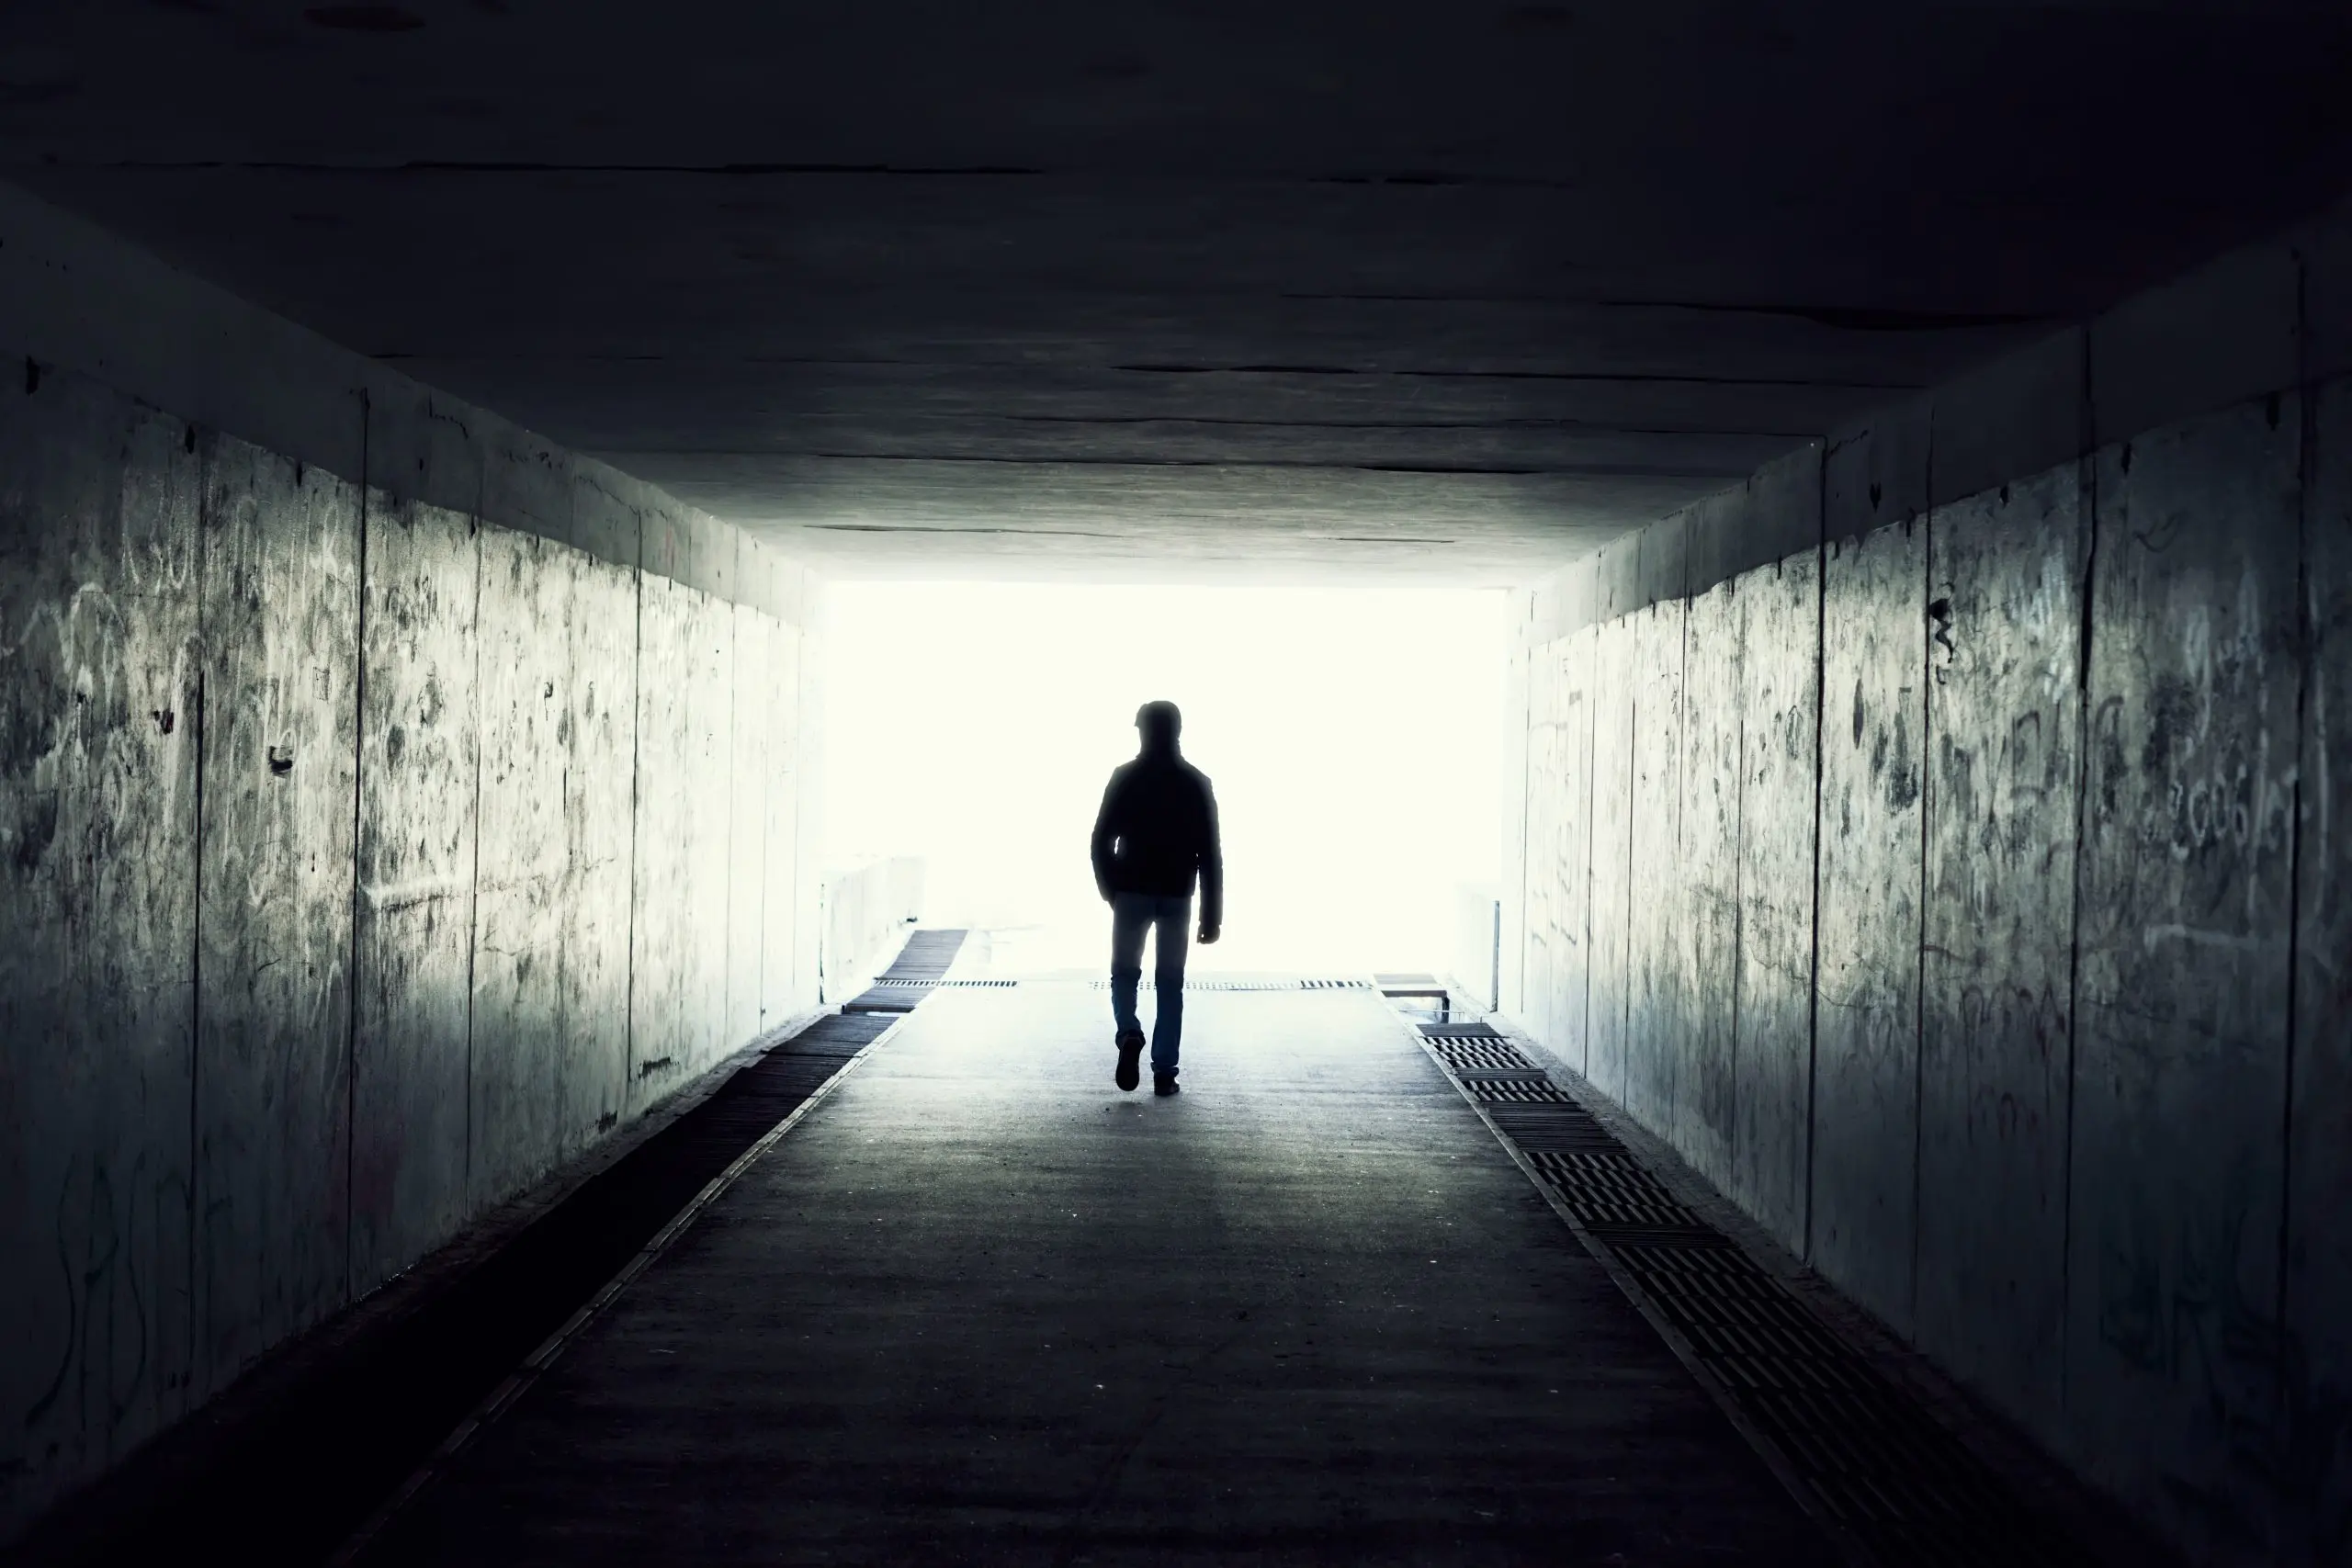 Person walking towards light through a dark tunnel